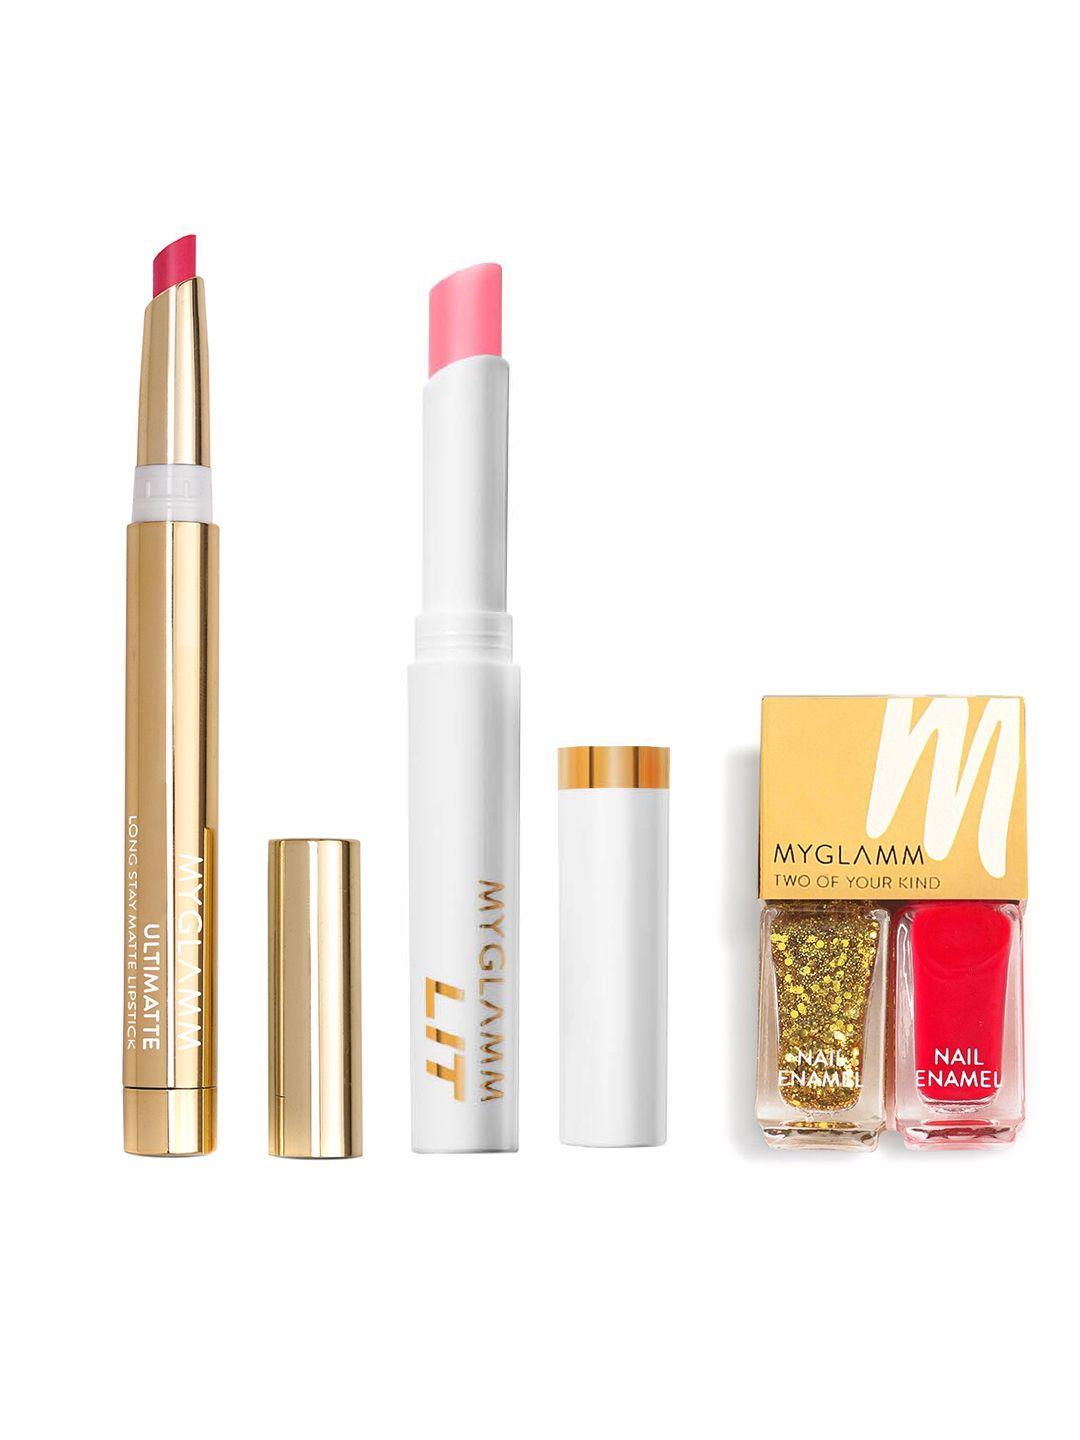 myglamm ultimatte lipstick + lit ph lip balm + two of your kind glitter nail enamel duo